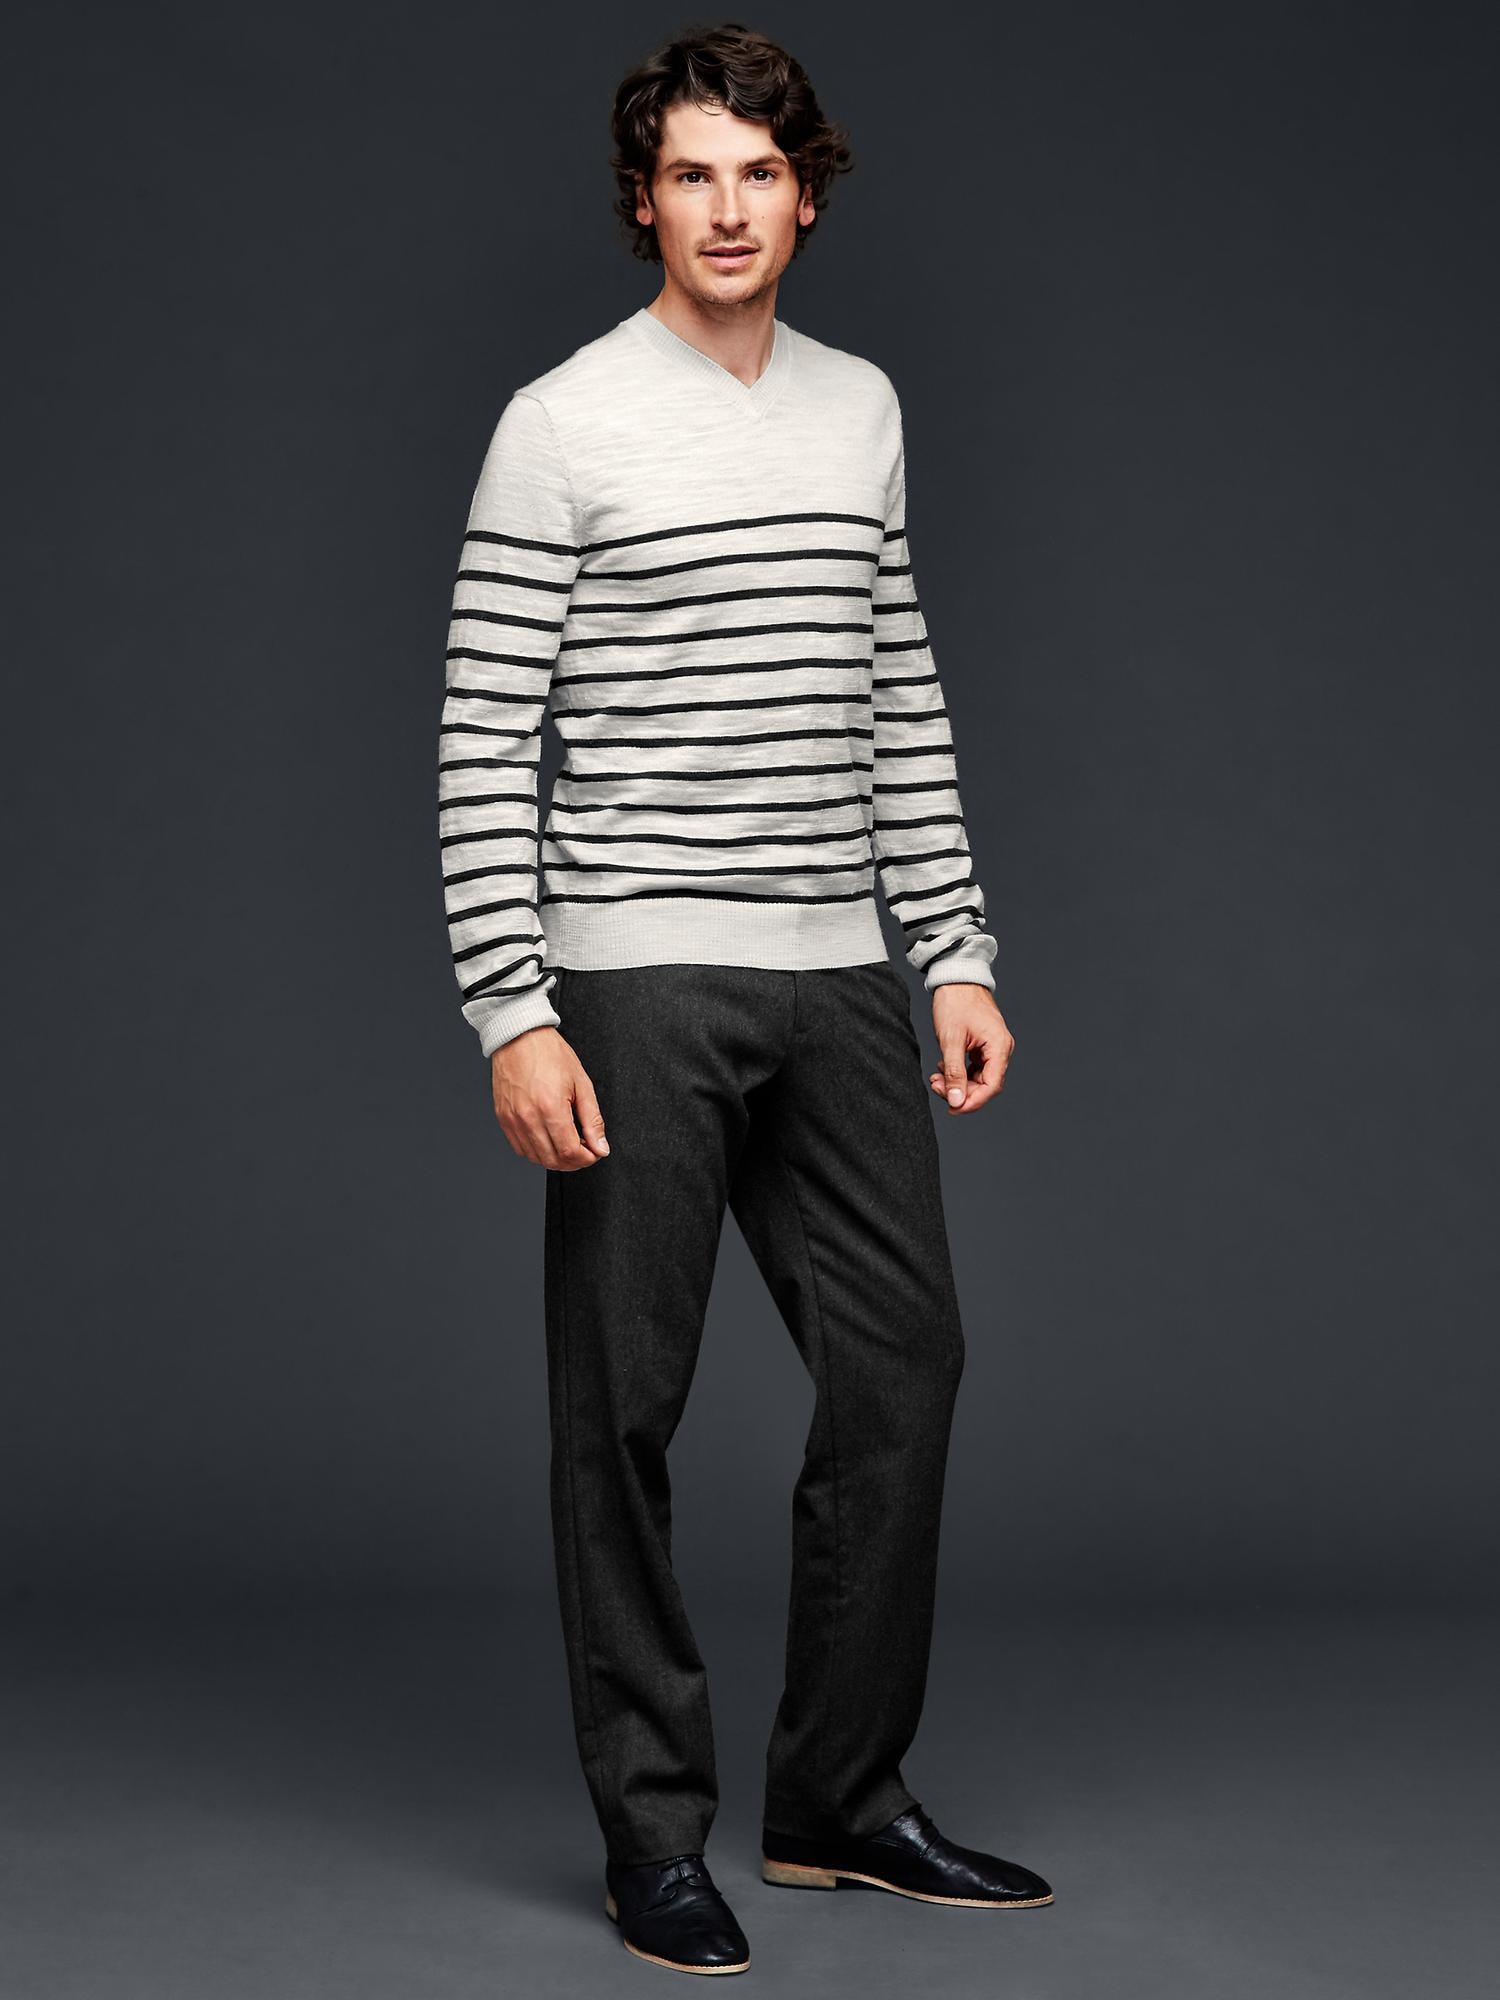 Merino stripe slub V-neck sweater | Gap